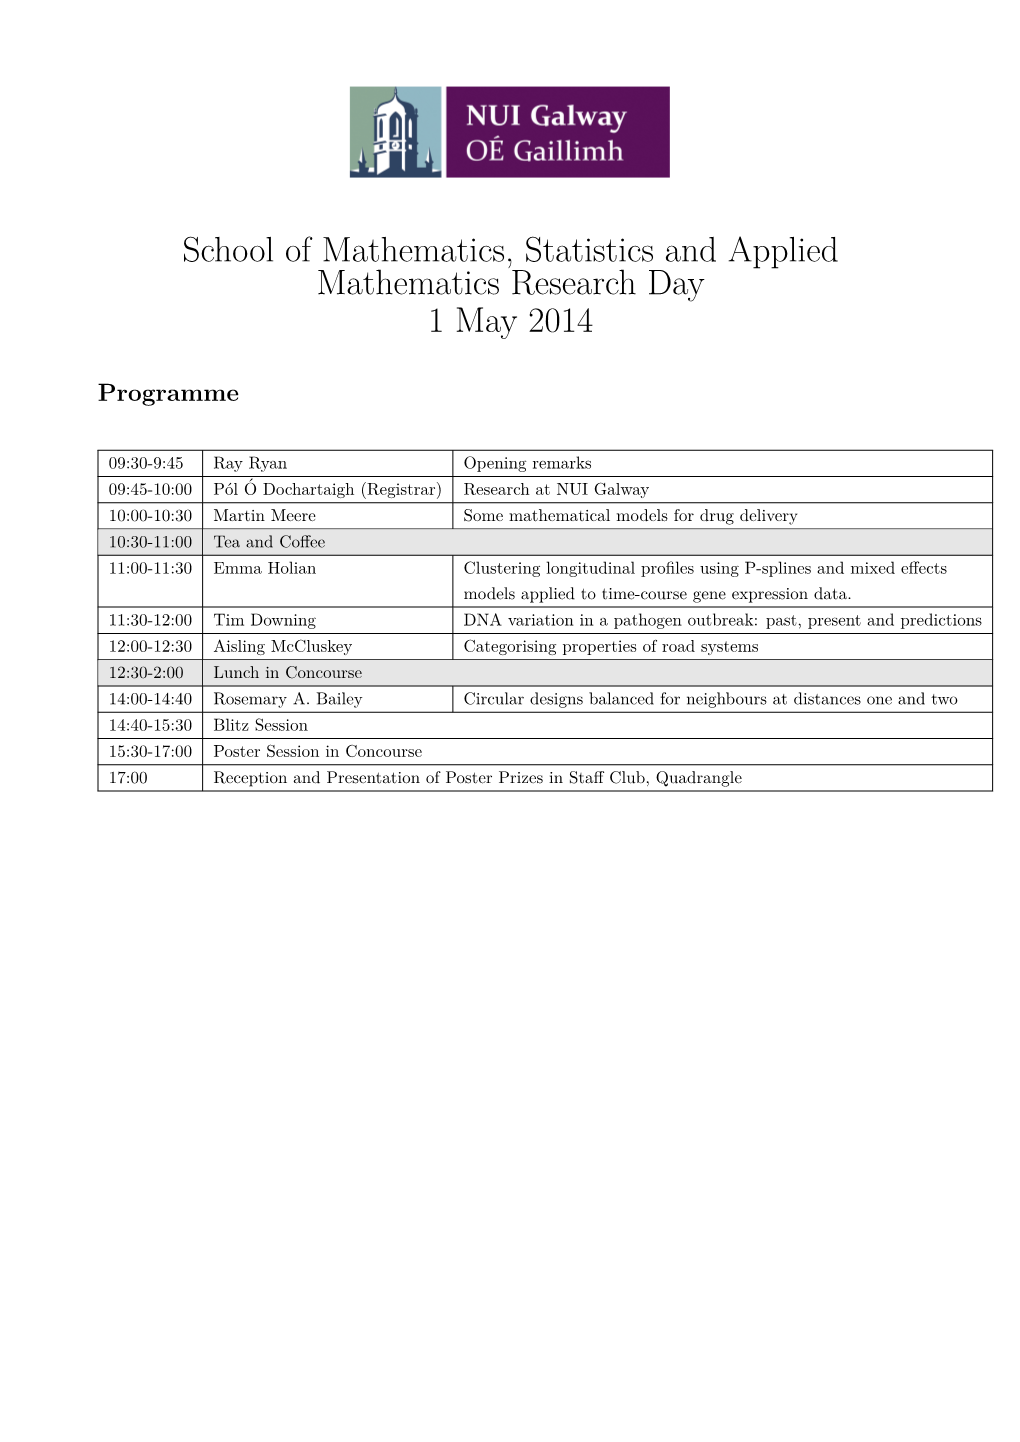 School of Mathematics, Statistics and Applied Mathematics Research Day 1 May 2014